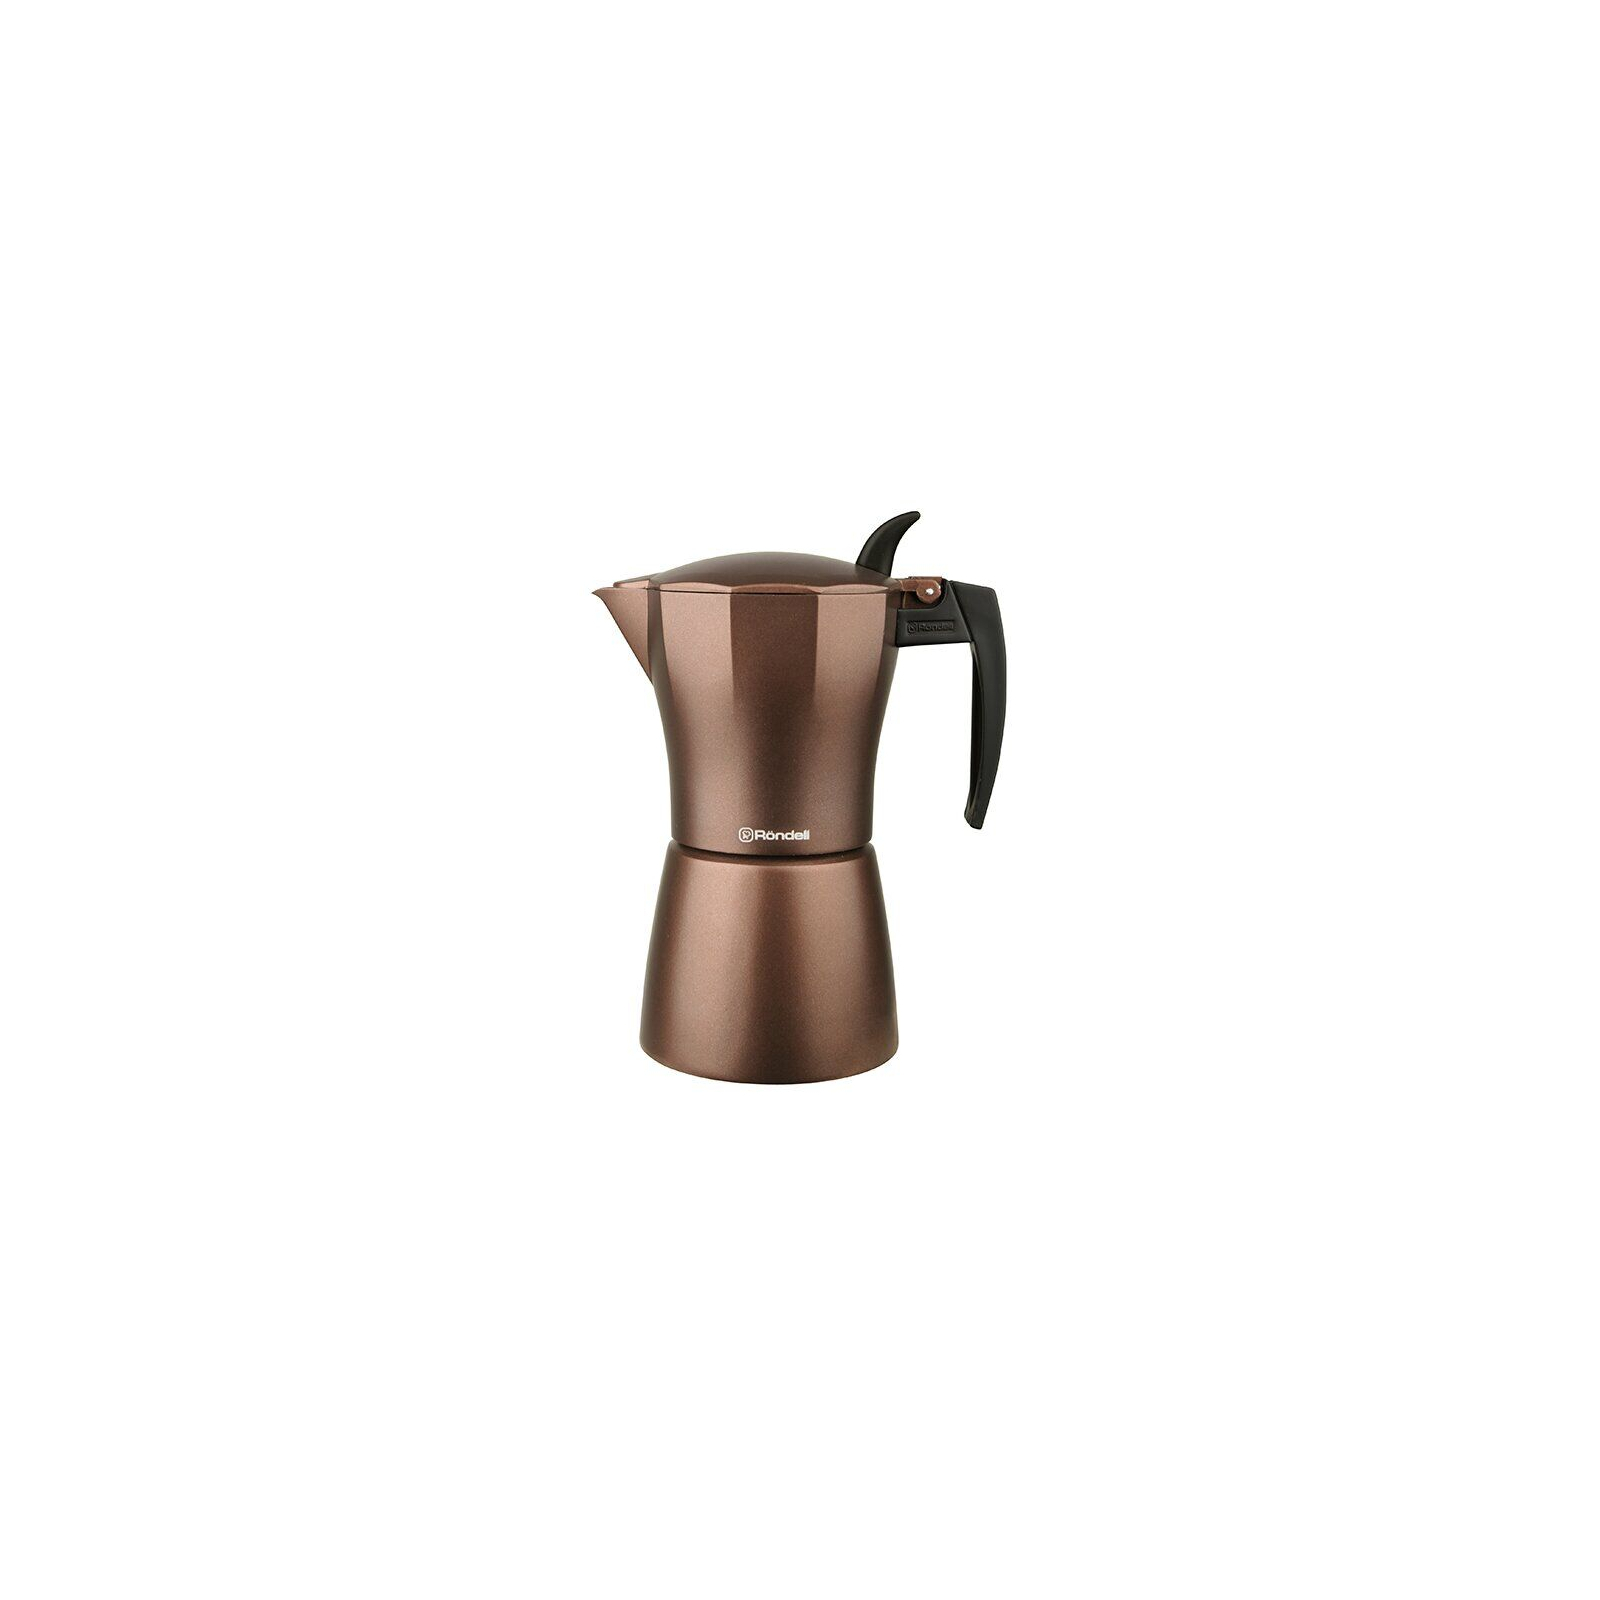 Гейзерная кофеварка Rondell Kettle 300 мл на 6 чашек (RDA-995) изображение 2